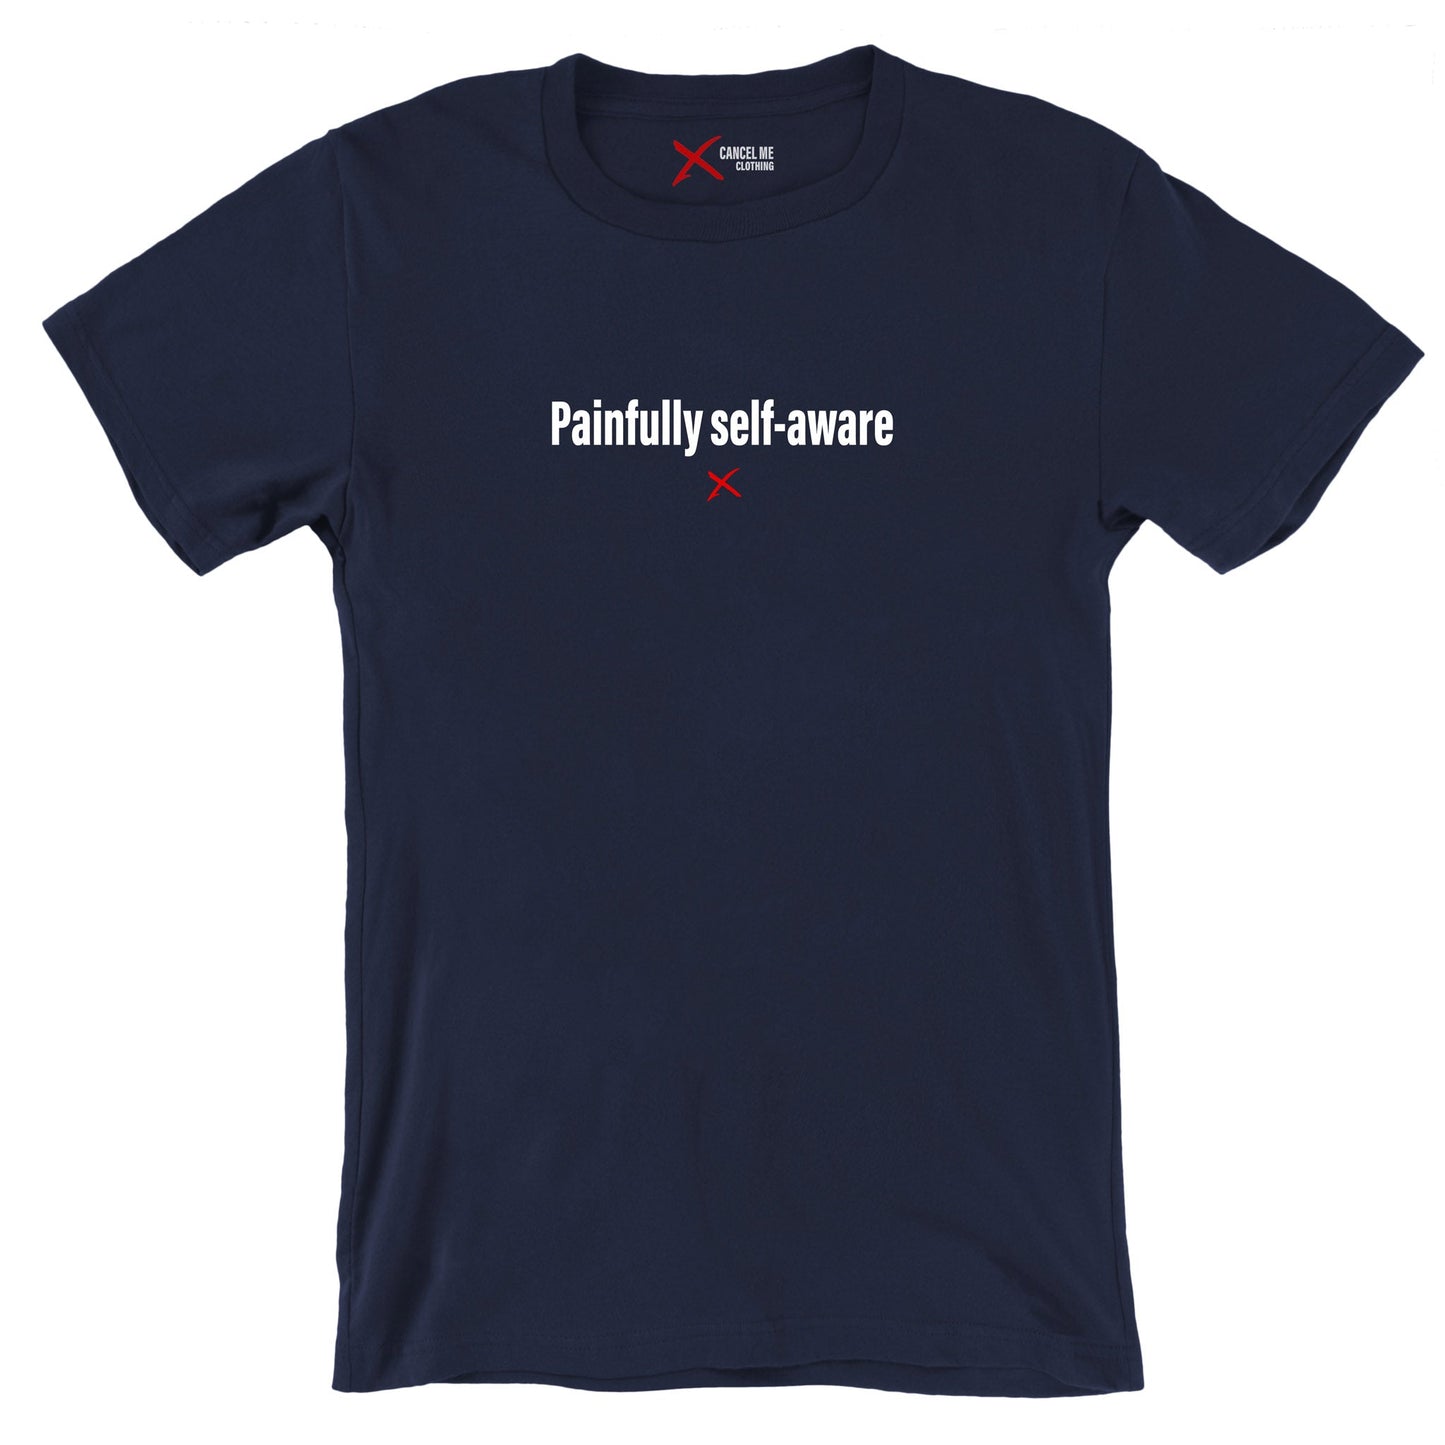 Painfully self-aware - Shirt